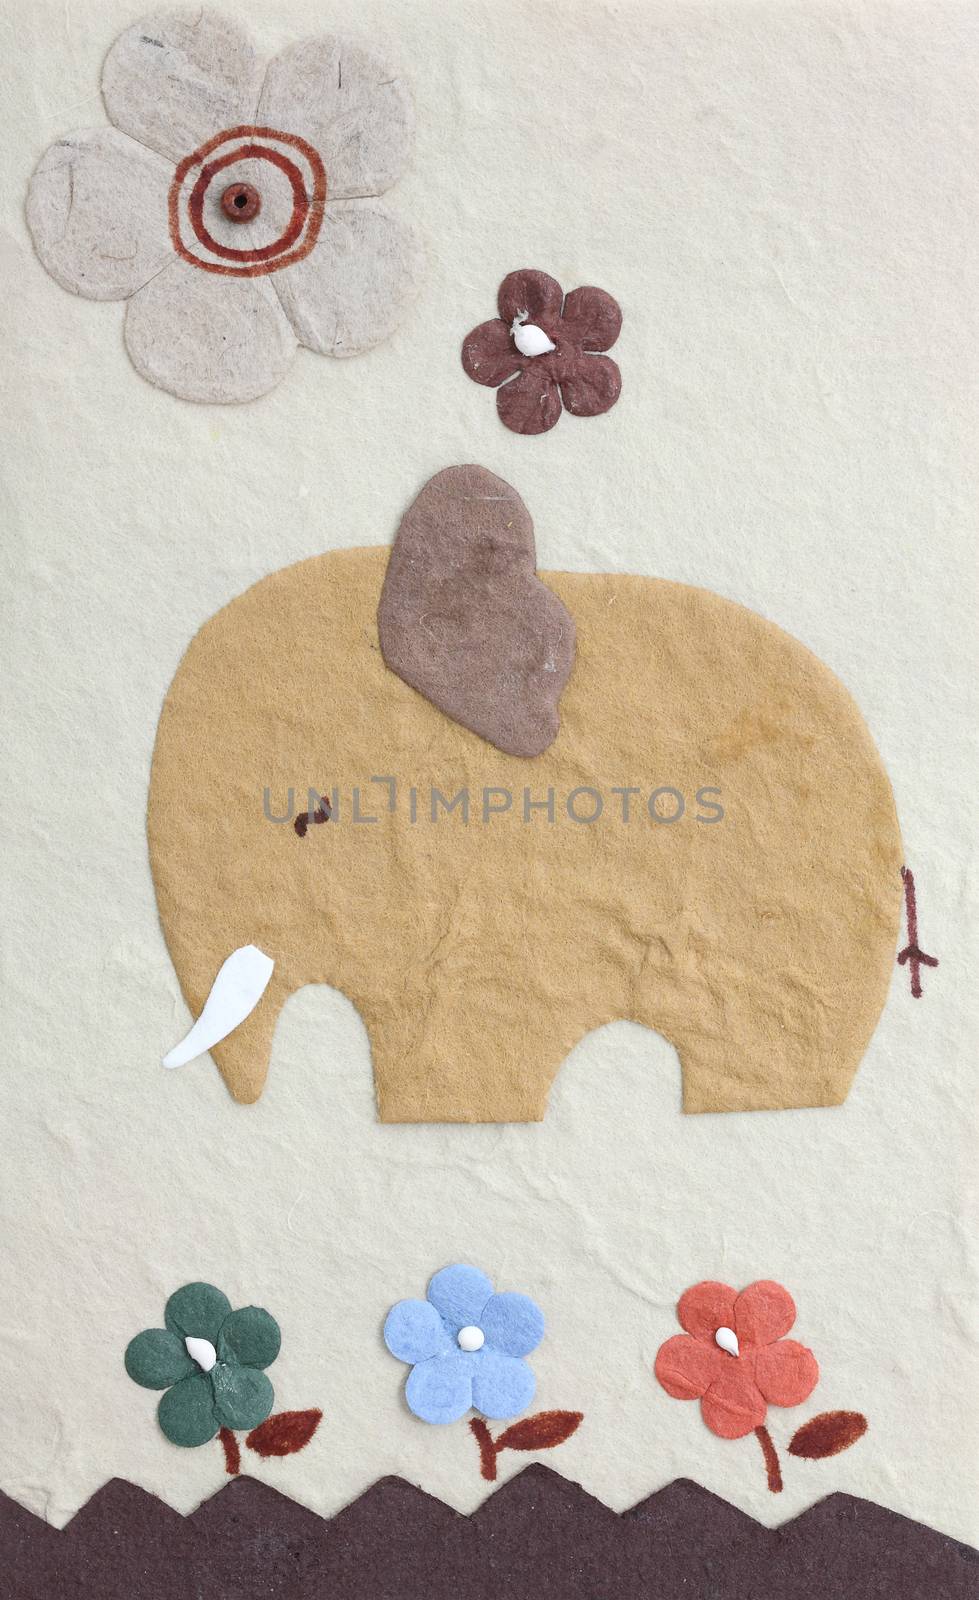 Papercraft elephant and flower by piyato